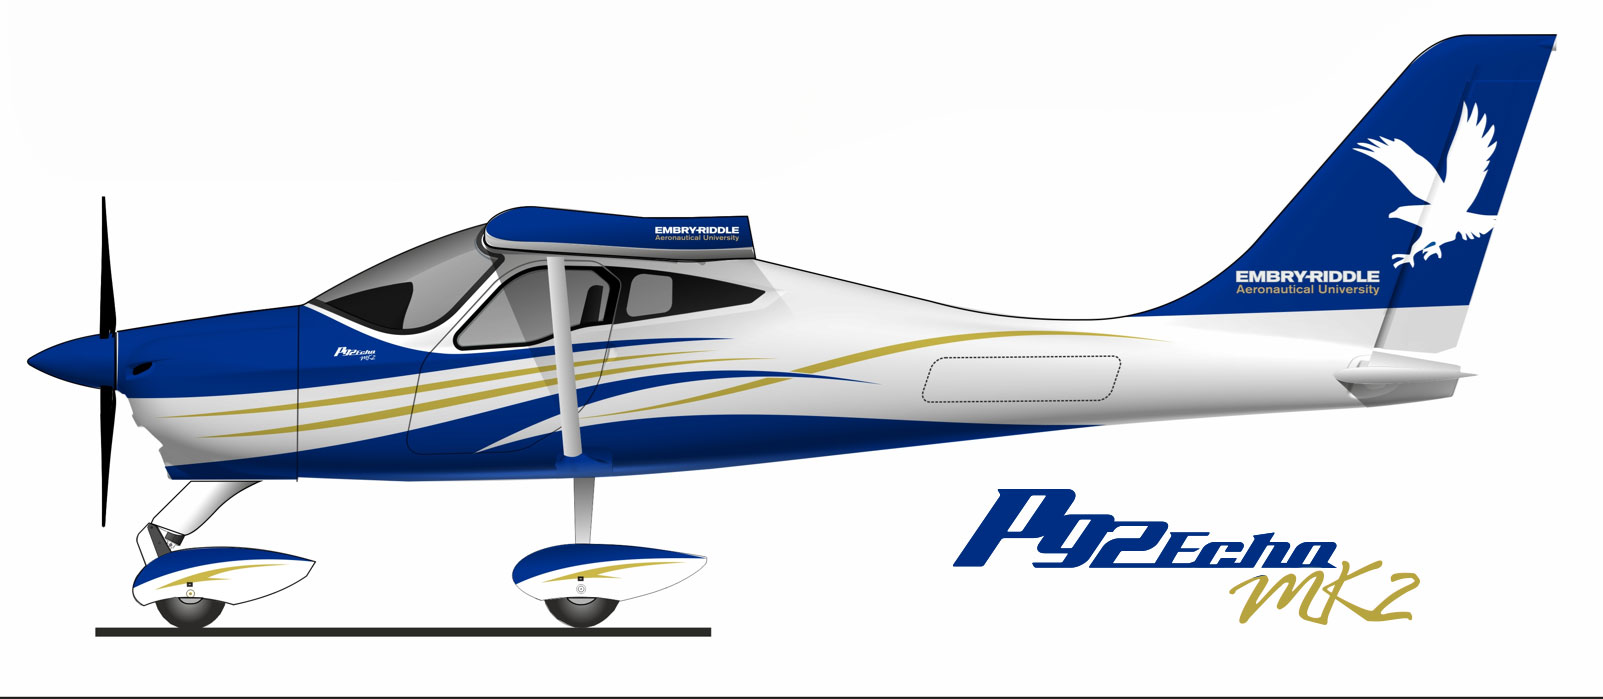 Tecnam_Embry-Riddle_Pilot Training AFM.aero